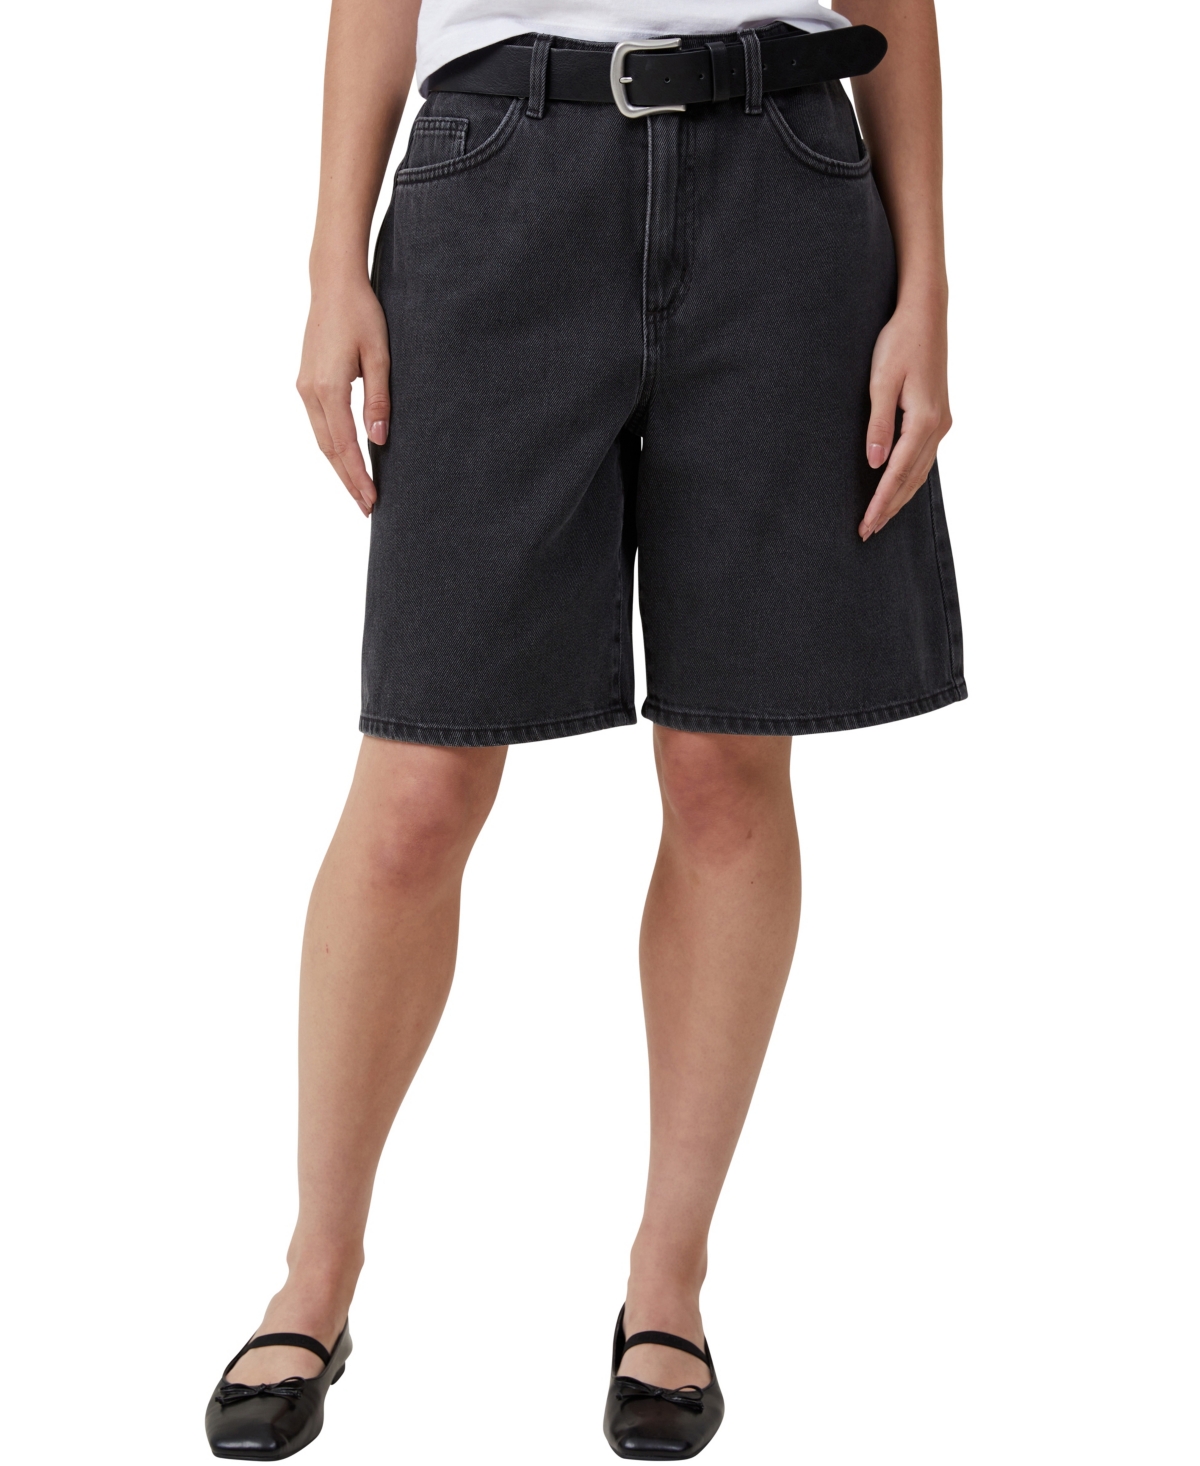 Women's Super Baggy Denim Jort Shorts - Graphite Black